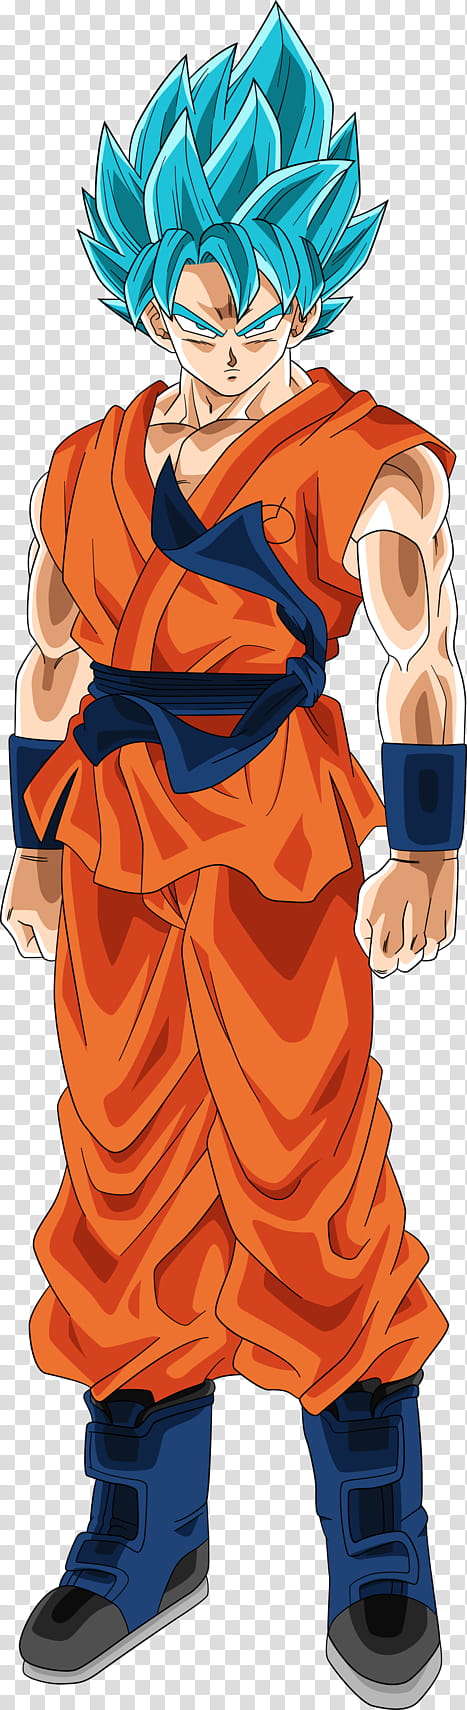 Ssgss Goku Dragonball Heroes Alt Palette transparent background PNG clipart